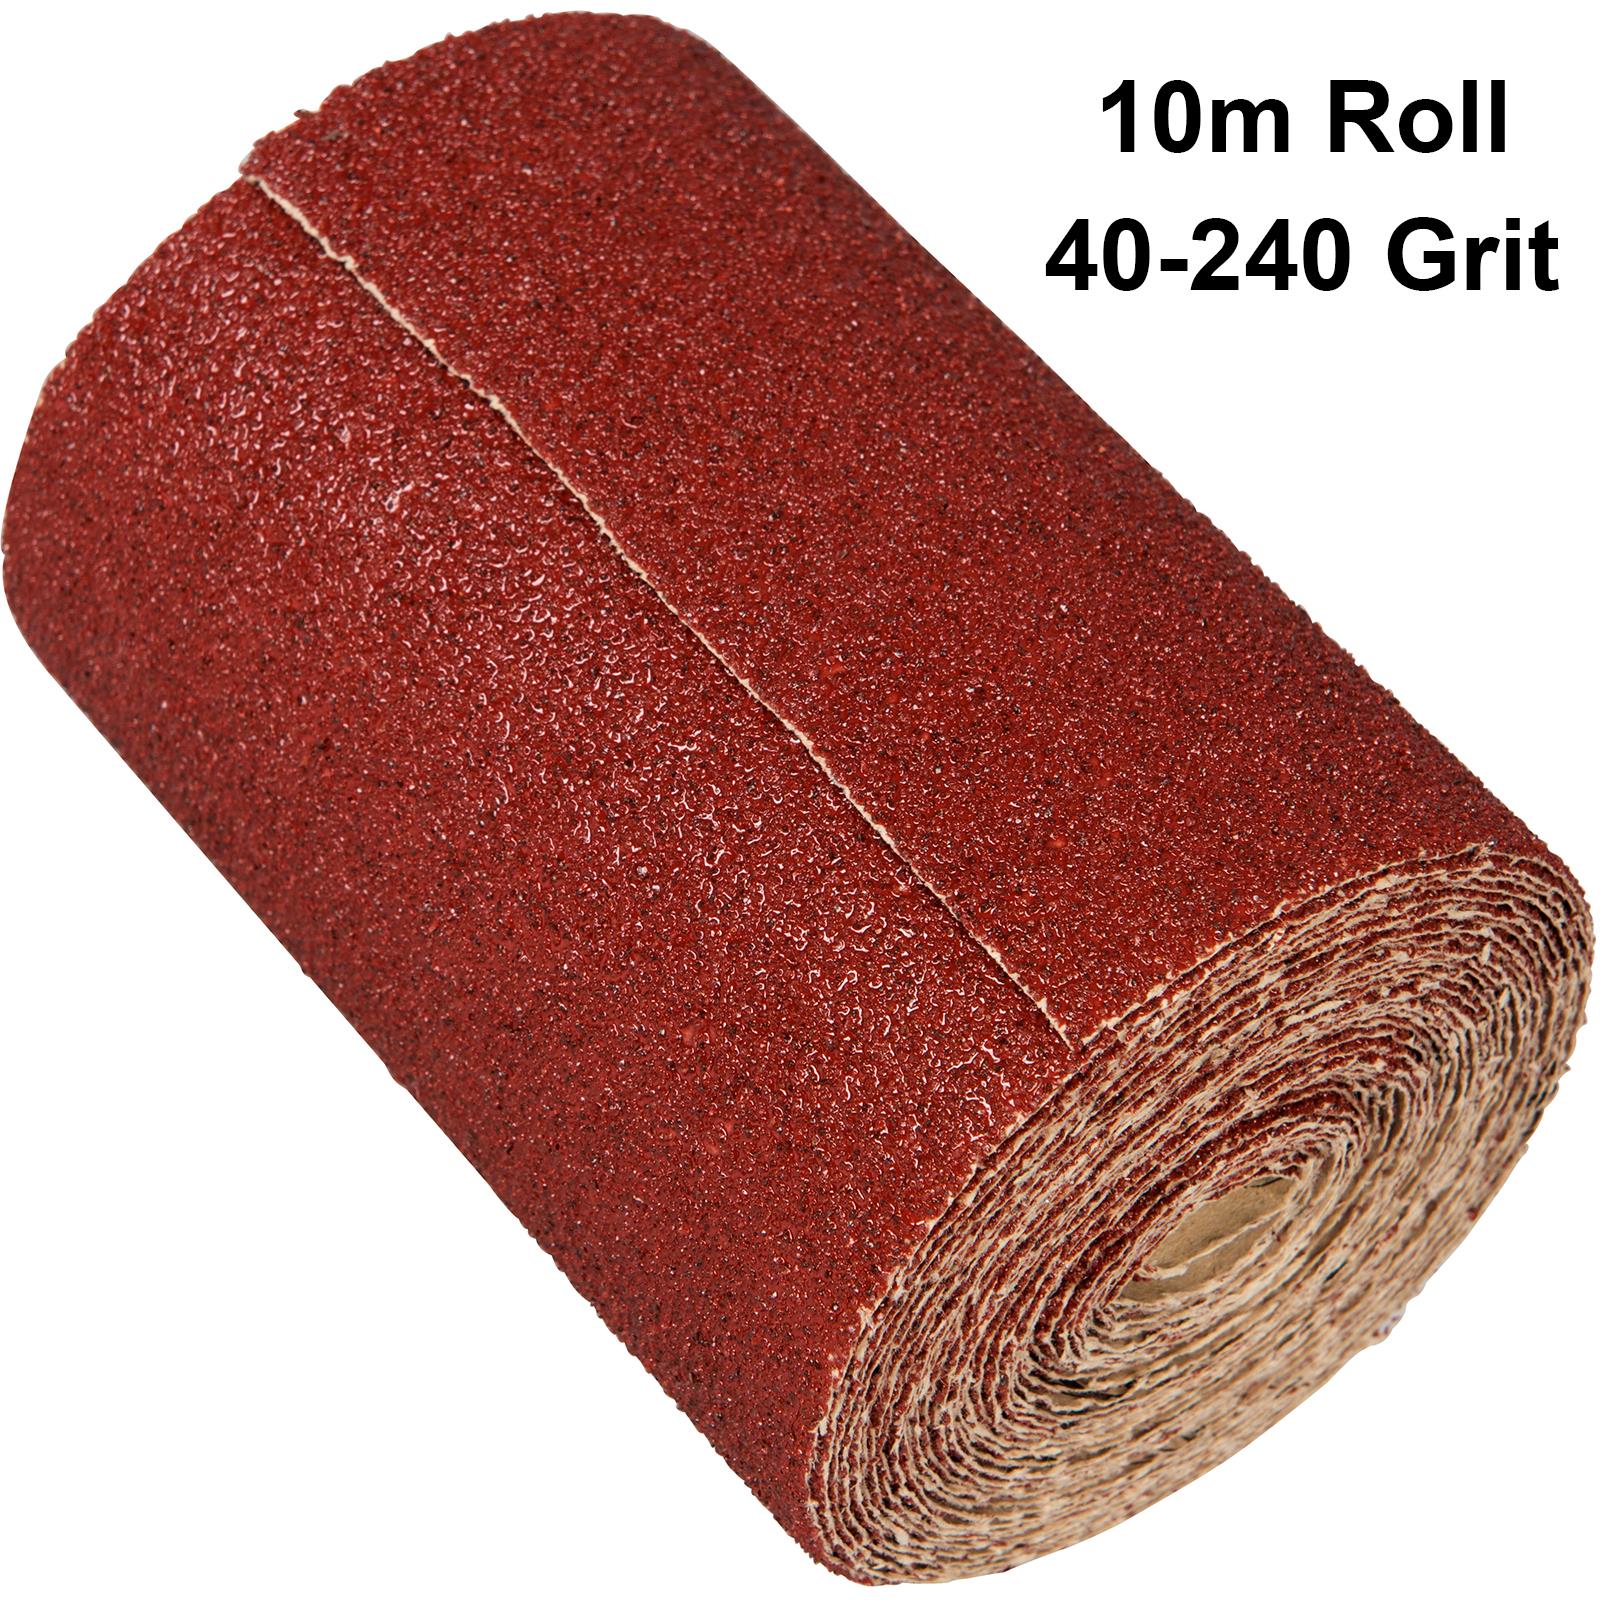 Silverline 10m Aluminium Oxide Sanding Roll 40-240 Grit